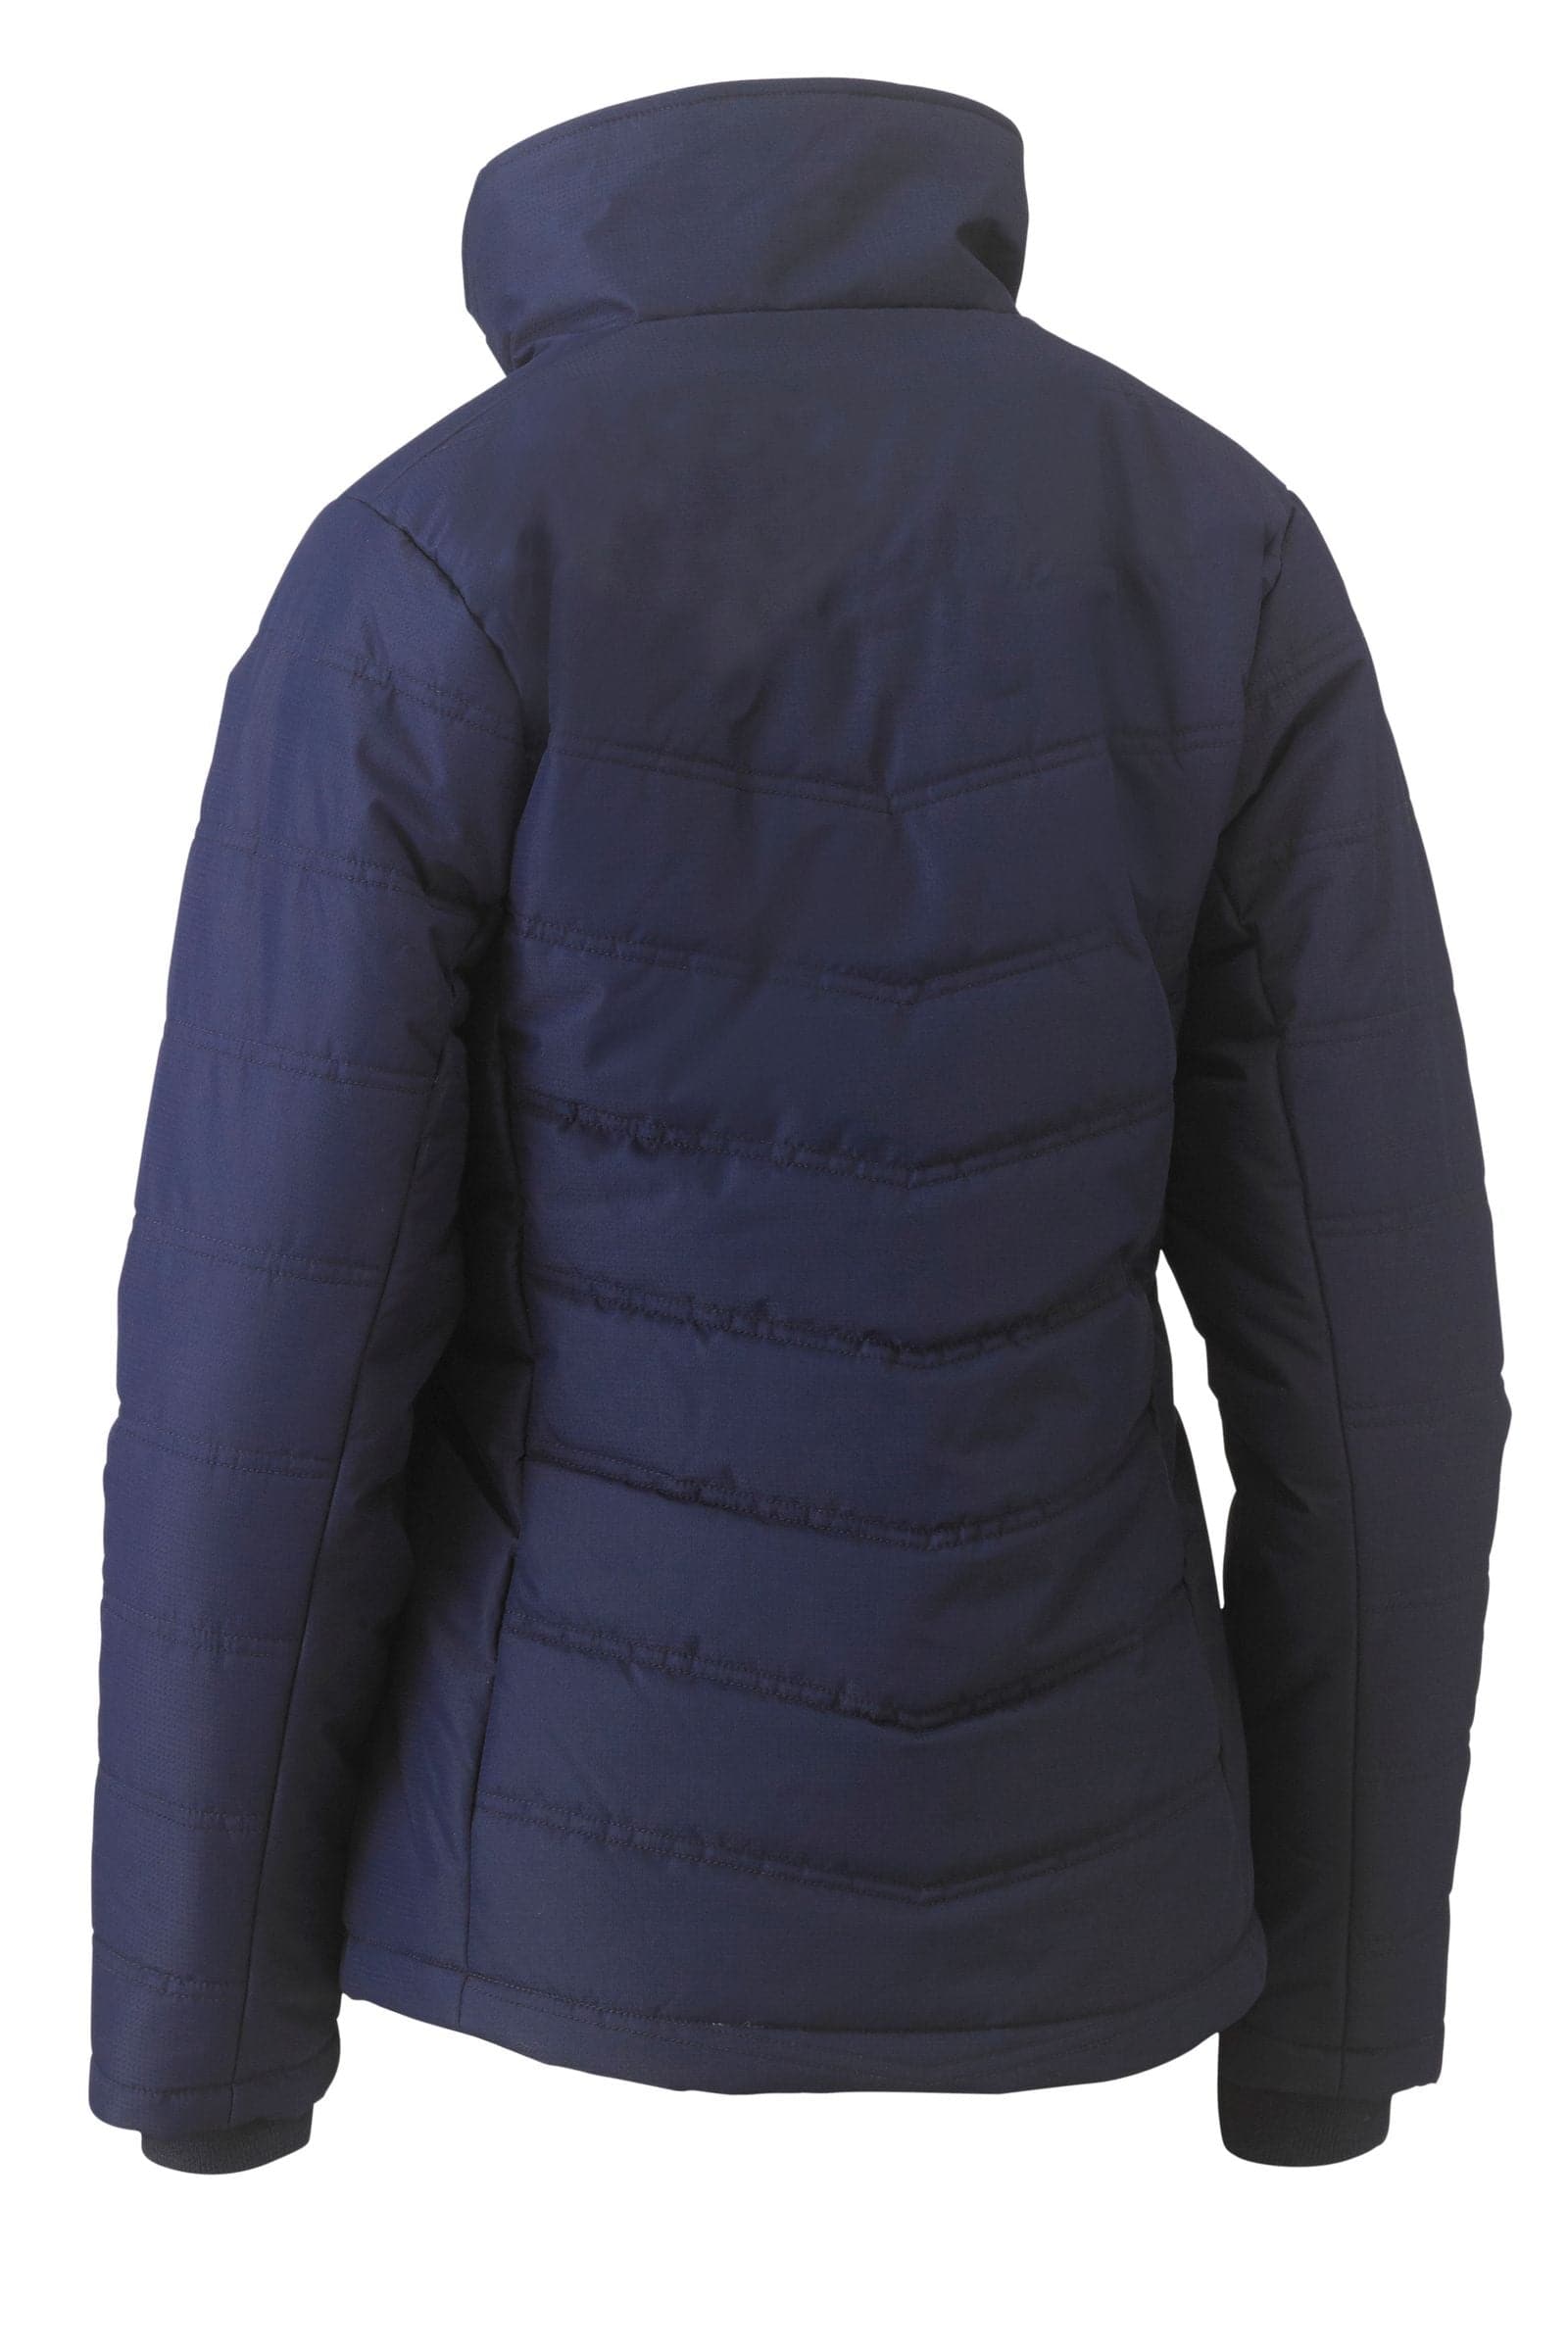 Bisley Bisley Womens Puffer Jacket (BJL6828) - Trade Wear